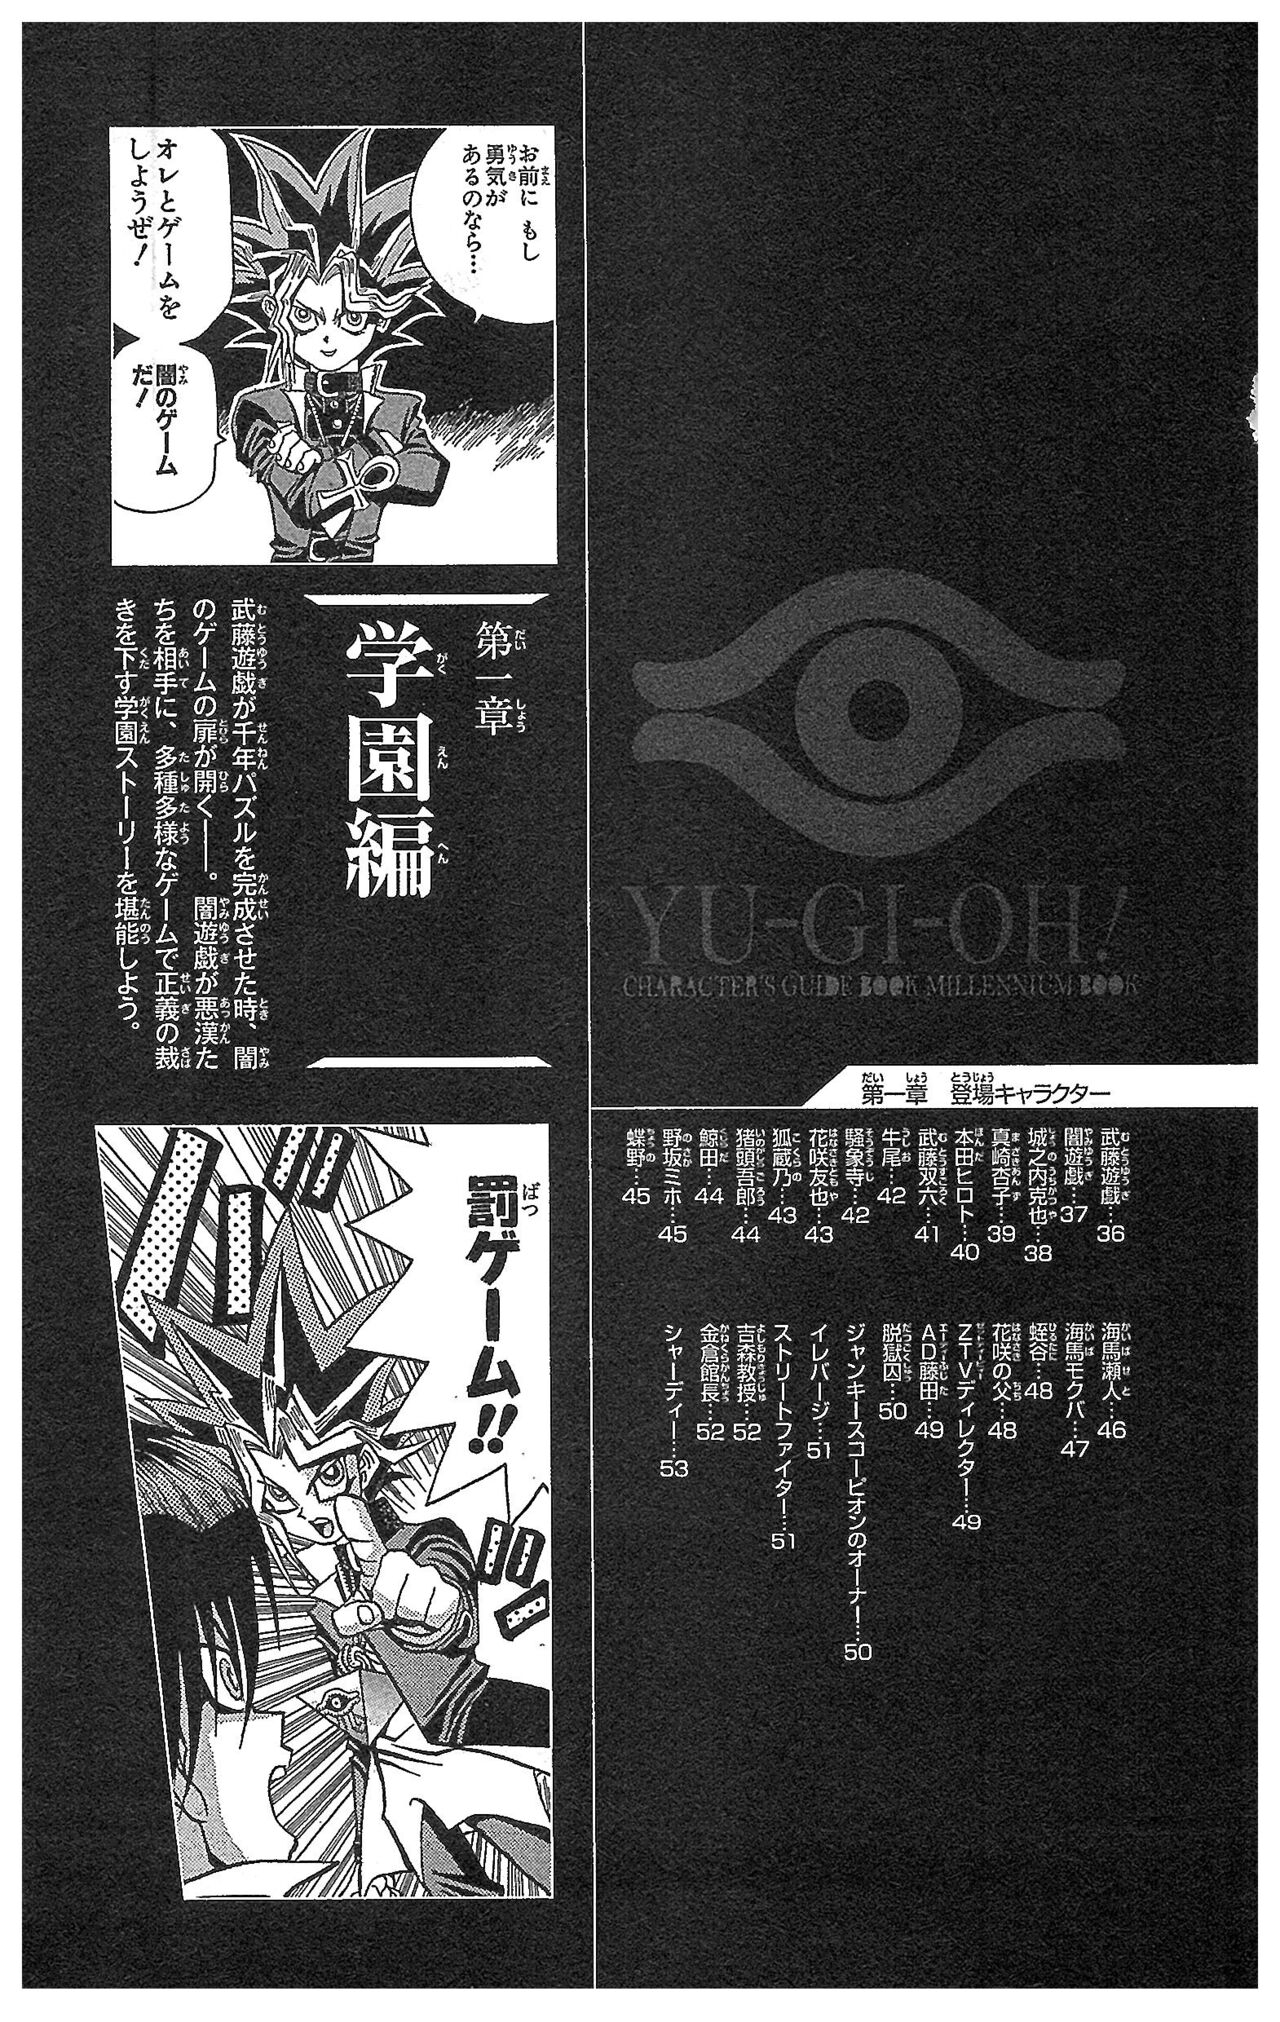 Yu-Gi-Oh! Character Guidebook: Millennium Book 29